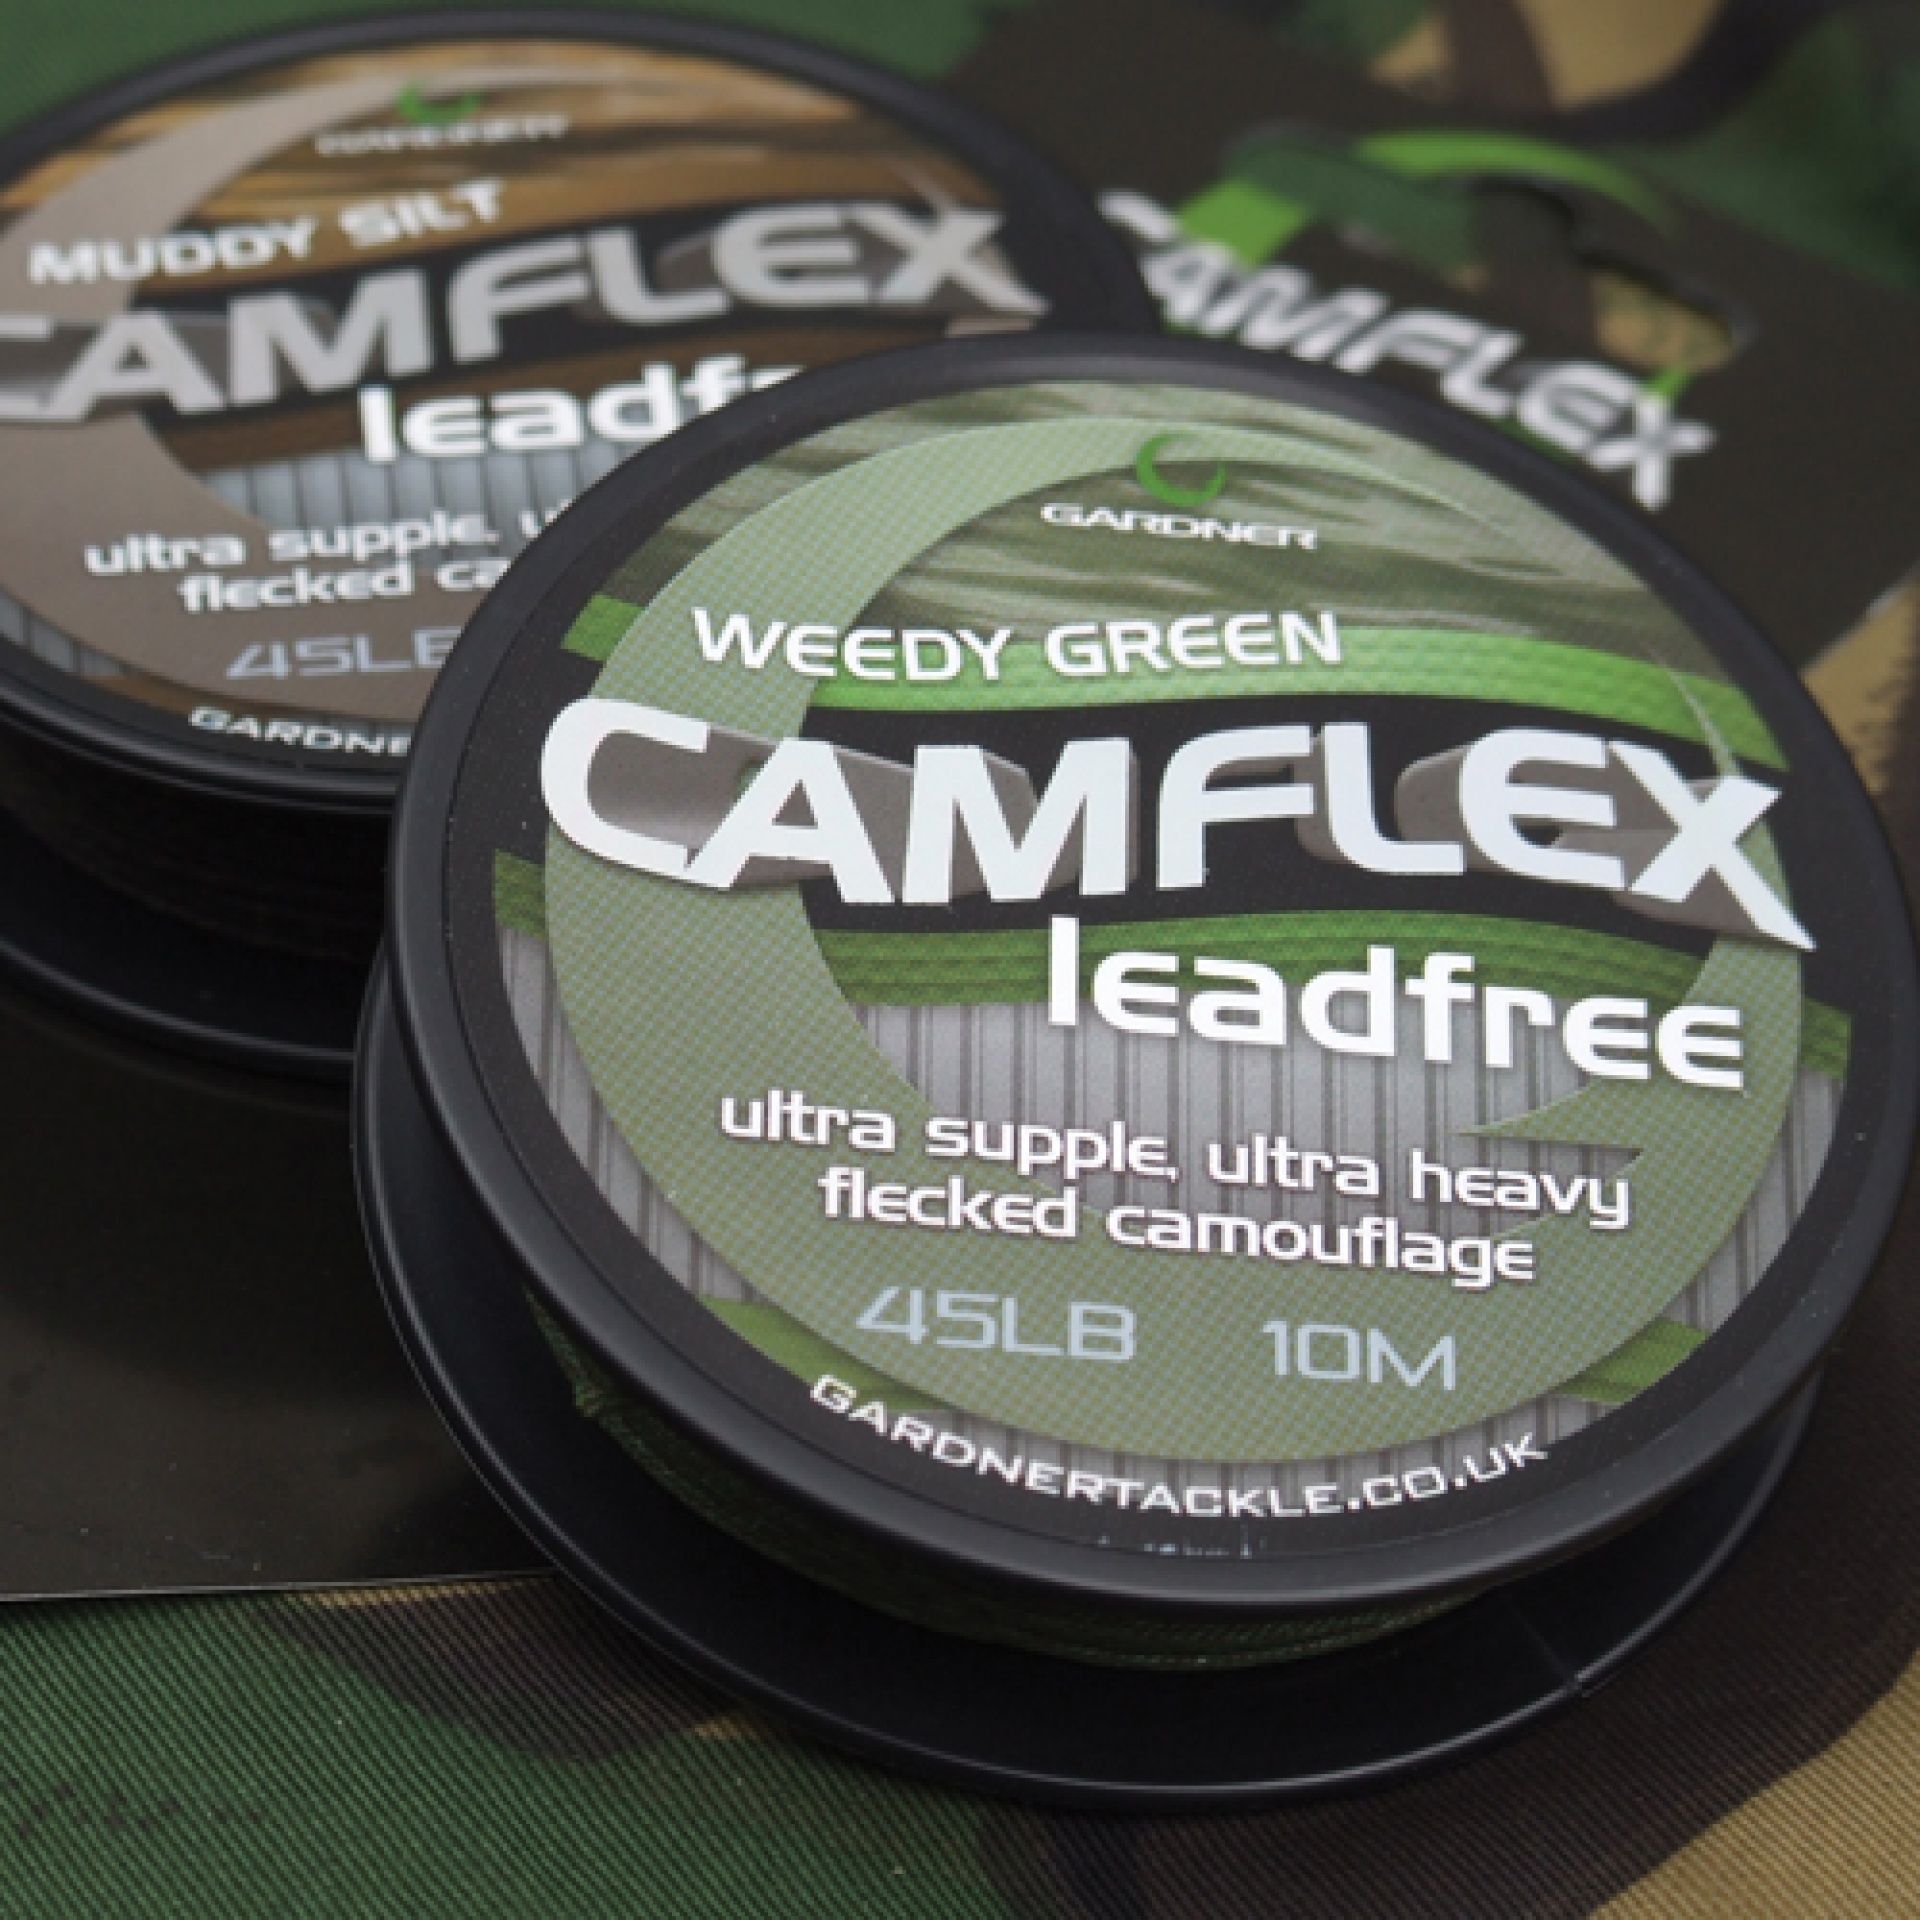 Gardner Camflex Leadfree 45lb